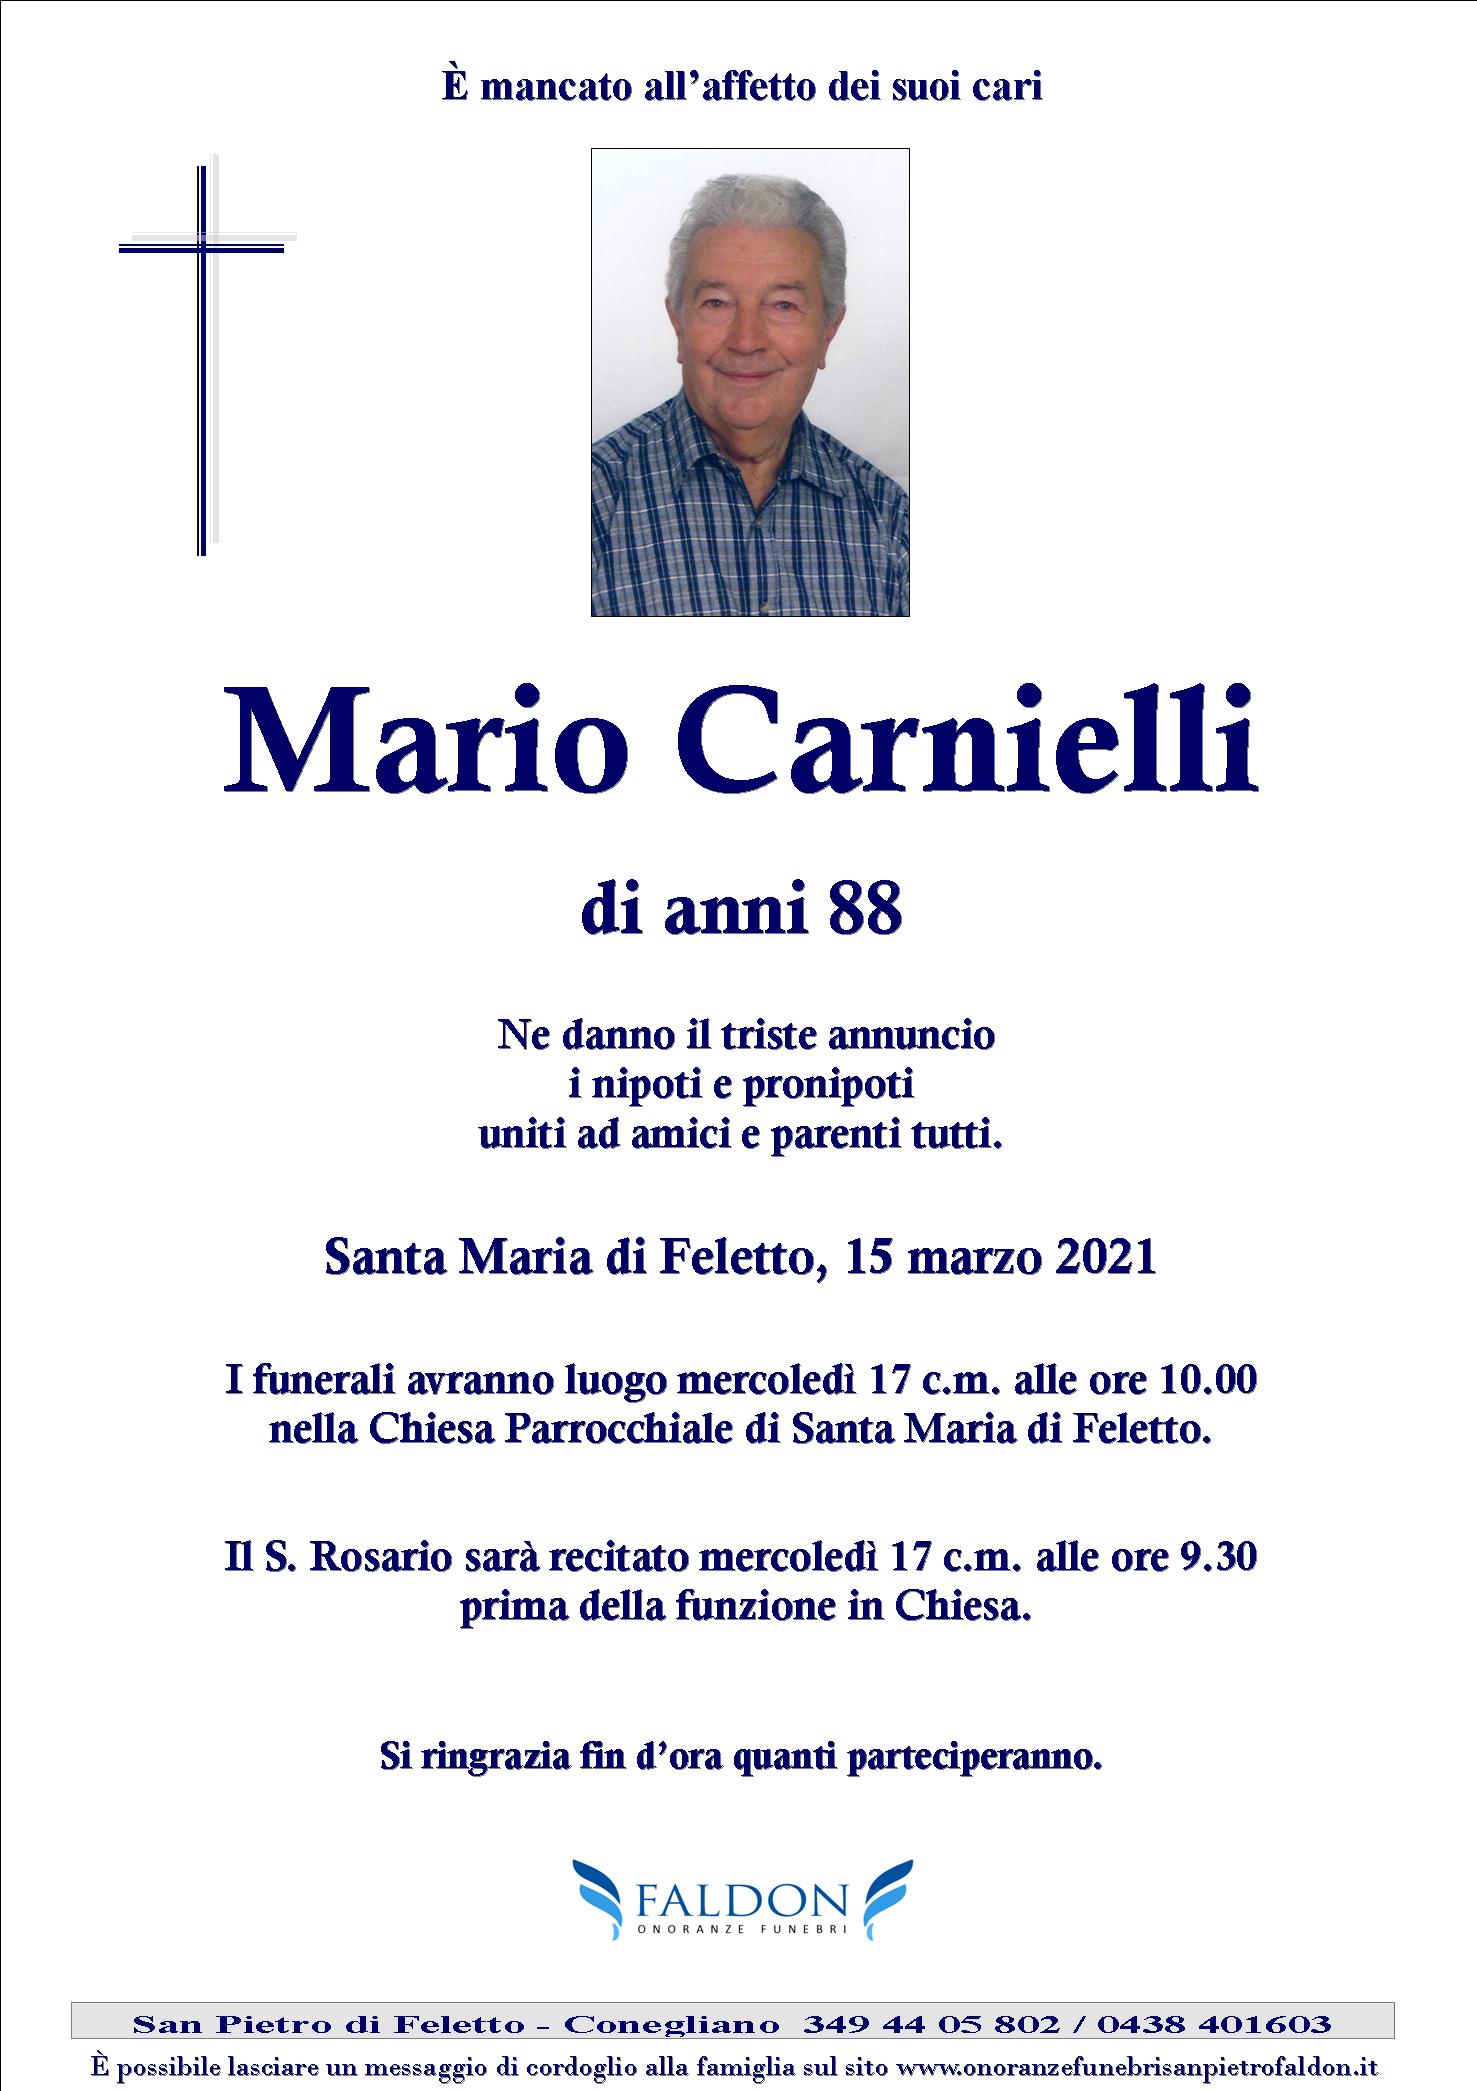 Mario Carnielli